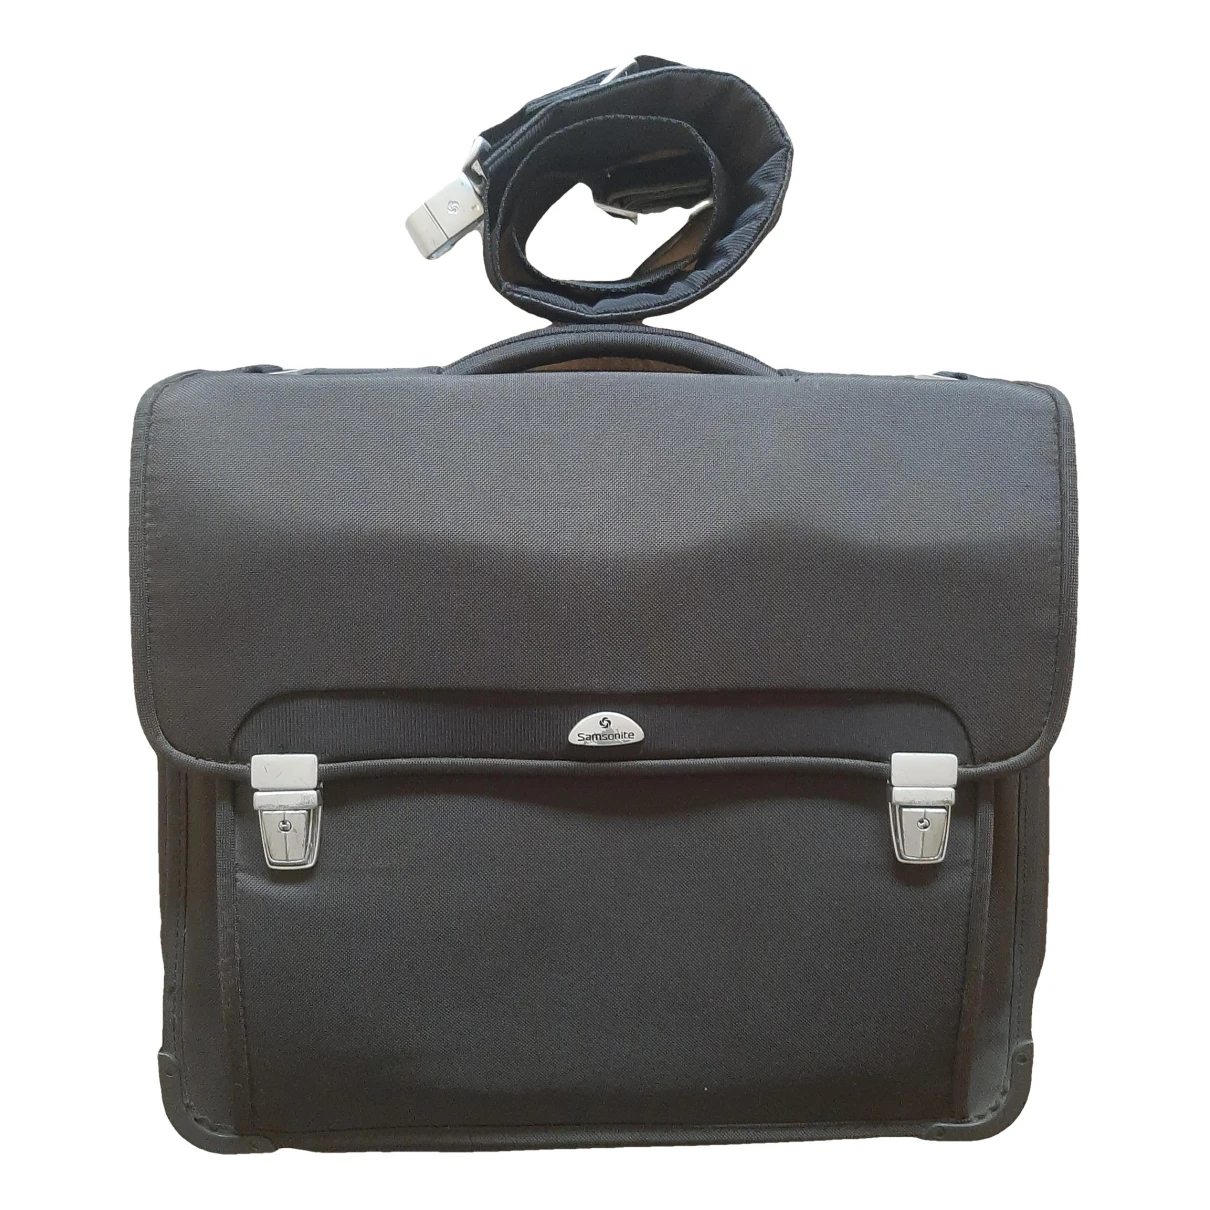 Pre-owned Samsonite Cloth Travel Bag In Black